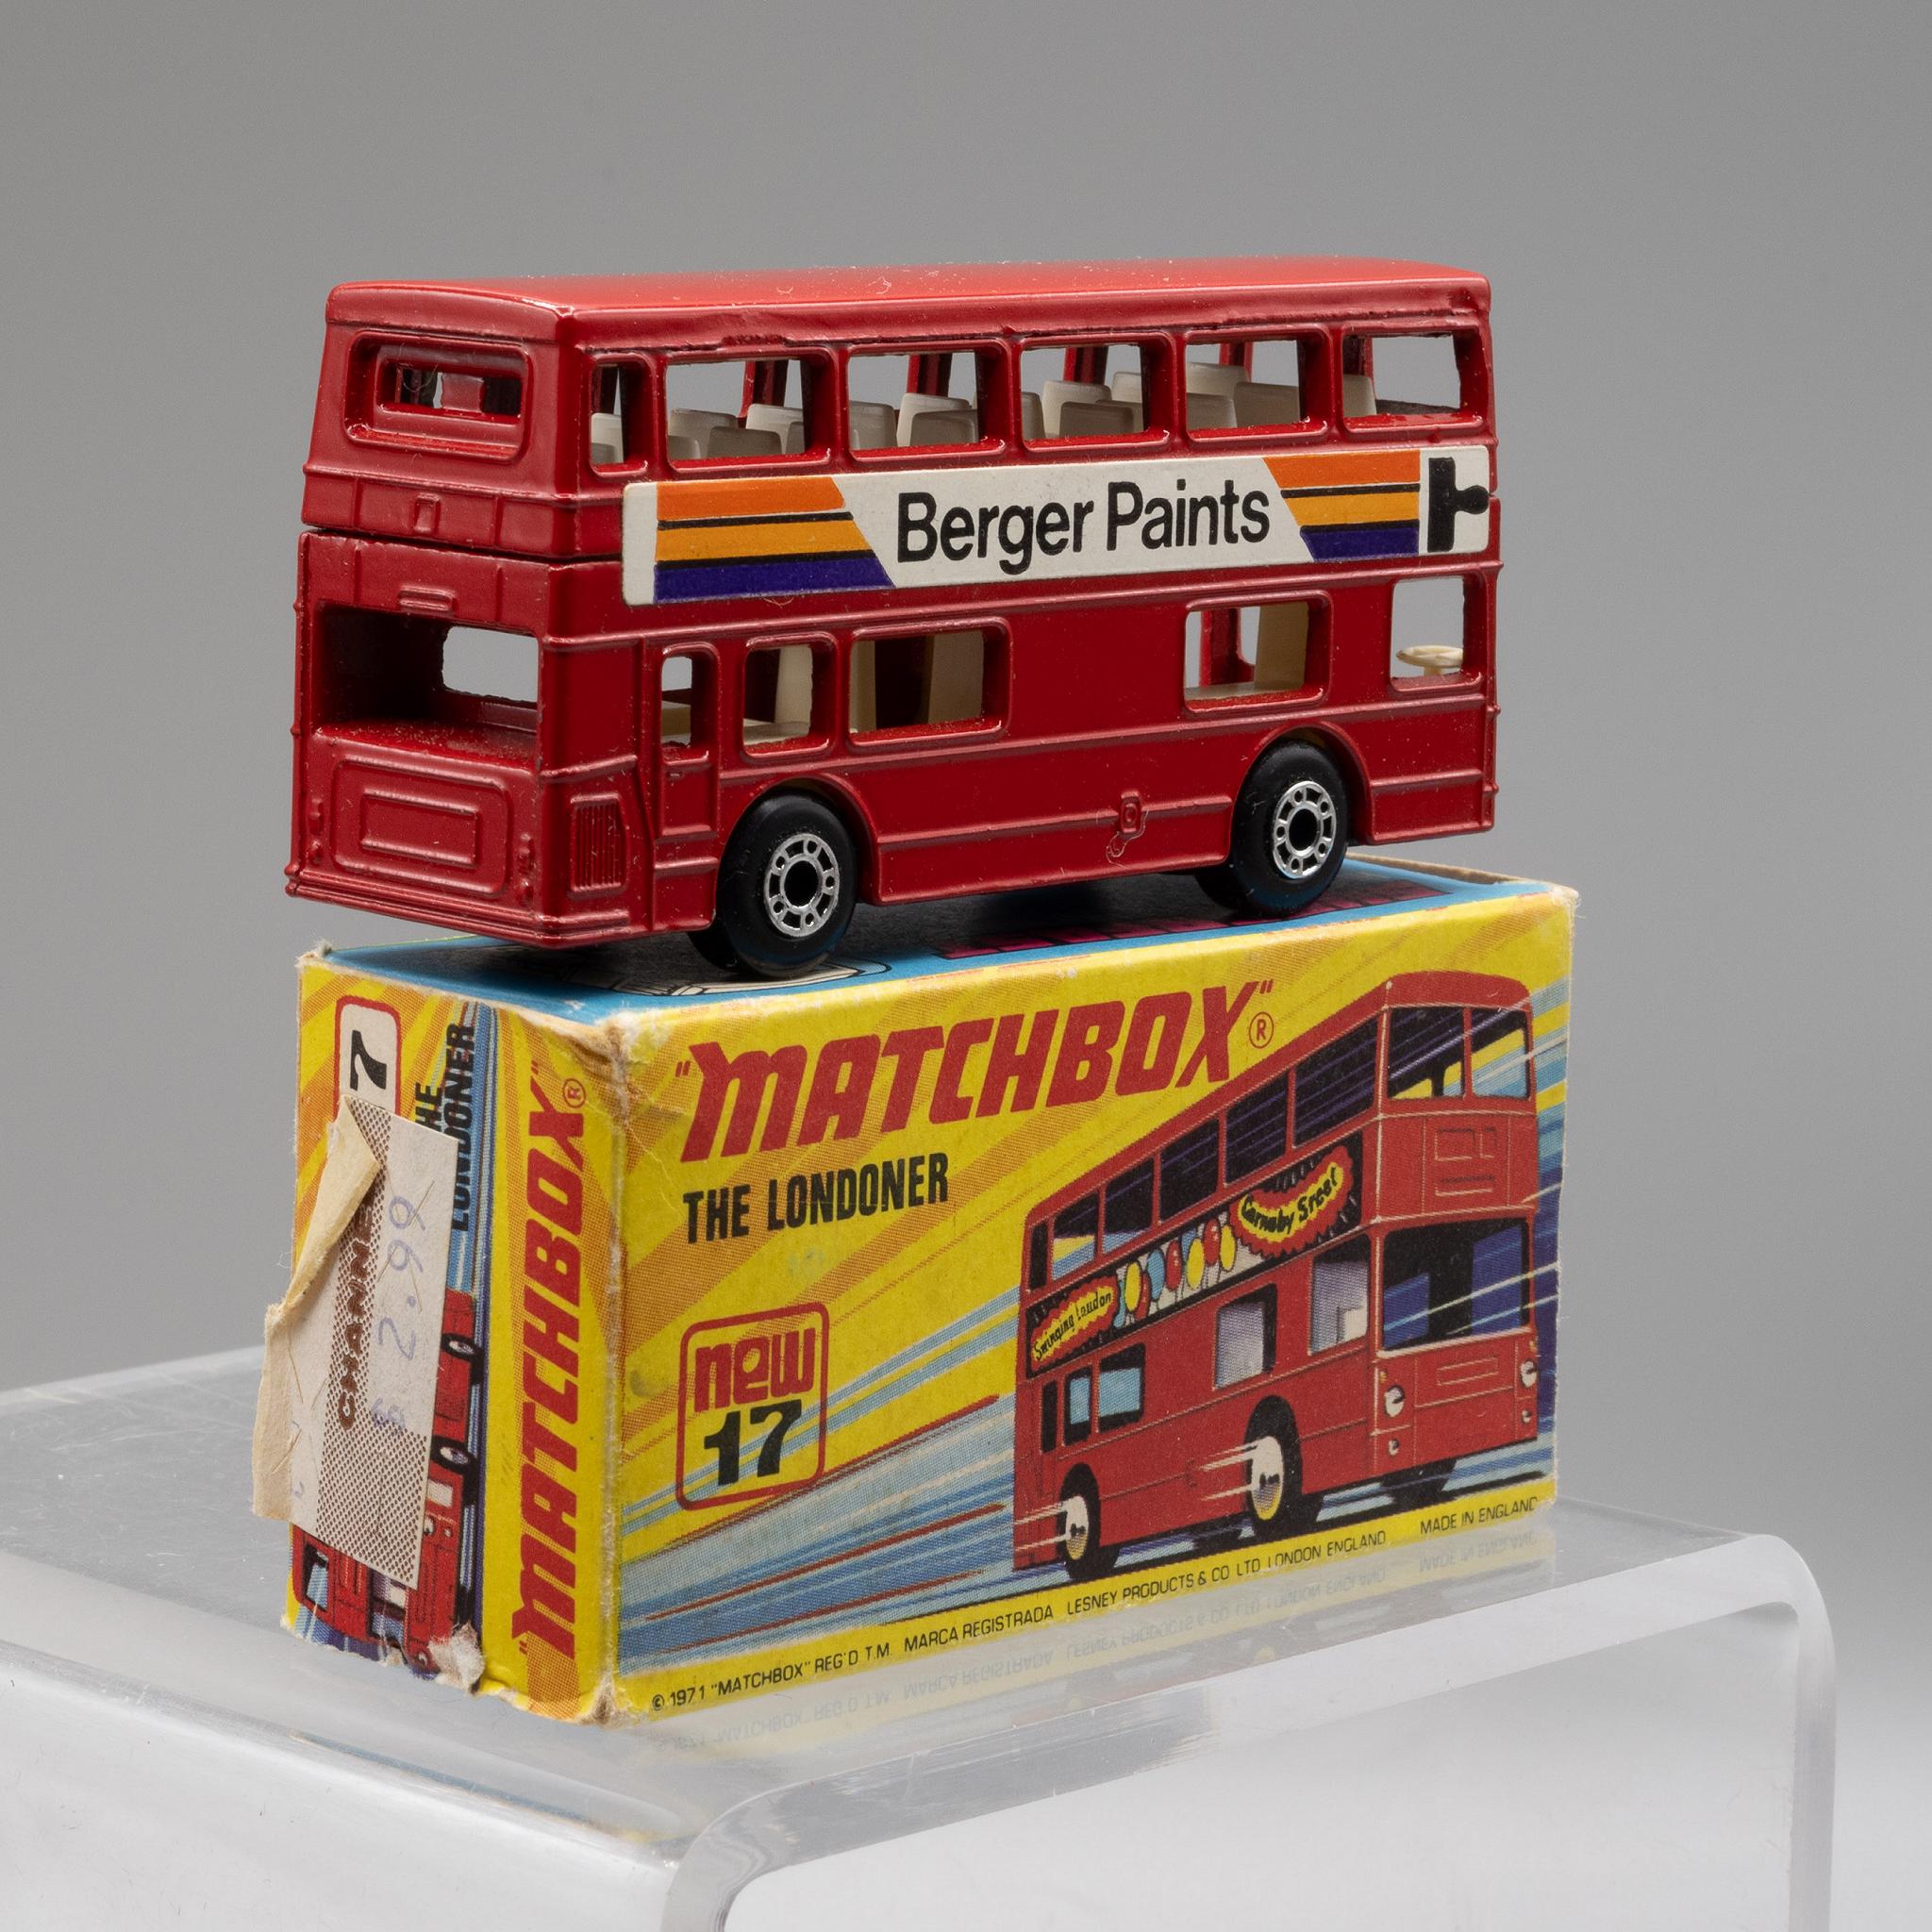 Matchbox+Superfast+The+Londoner+bus+Berger+Paints picture 2